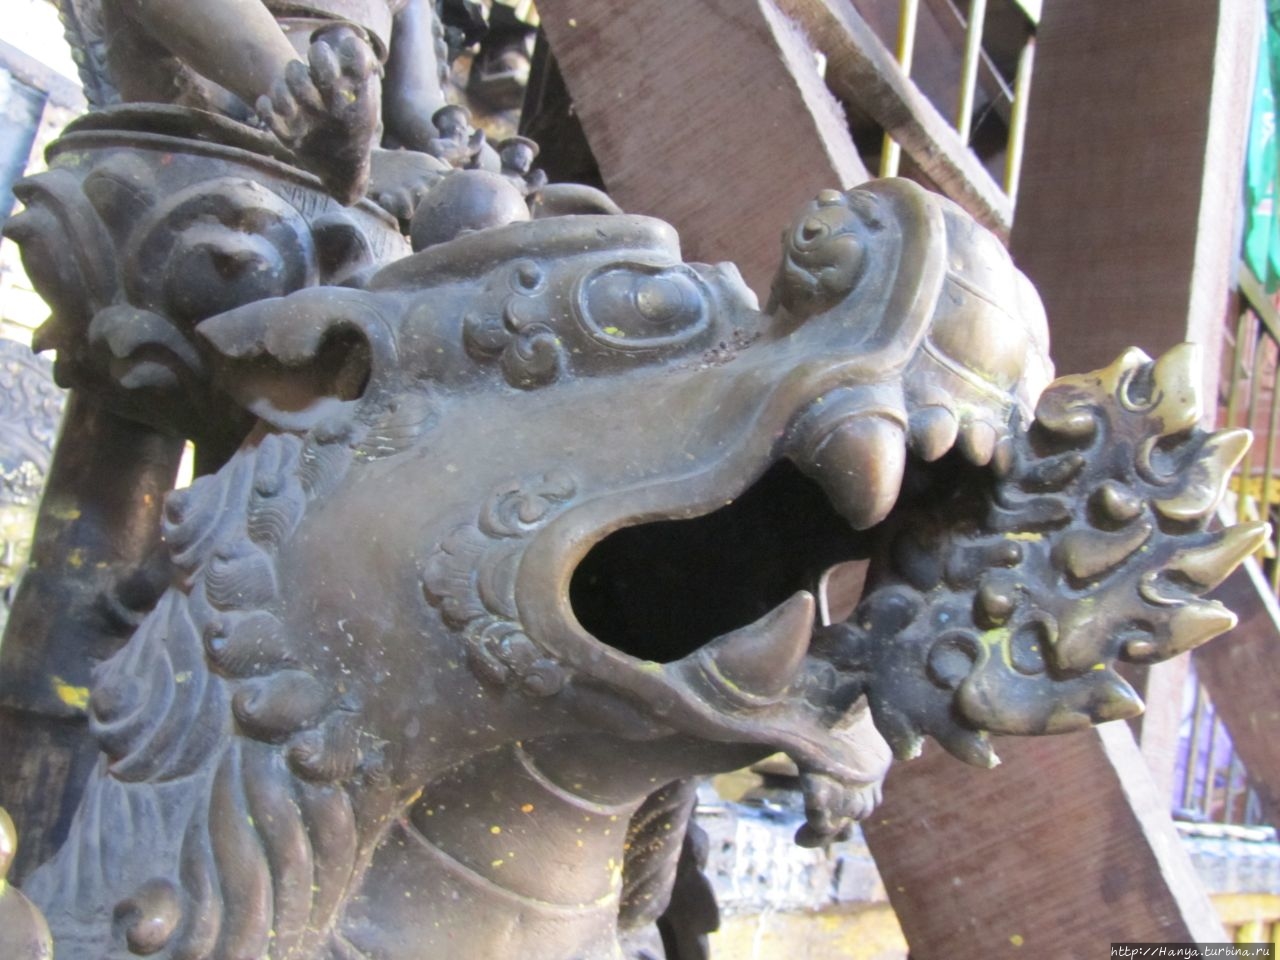 Золотой Храм Патан (Лалитпур), Непал